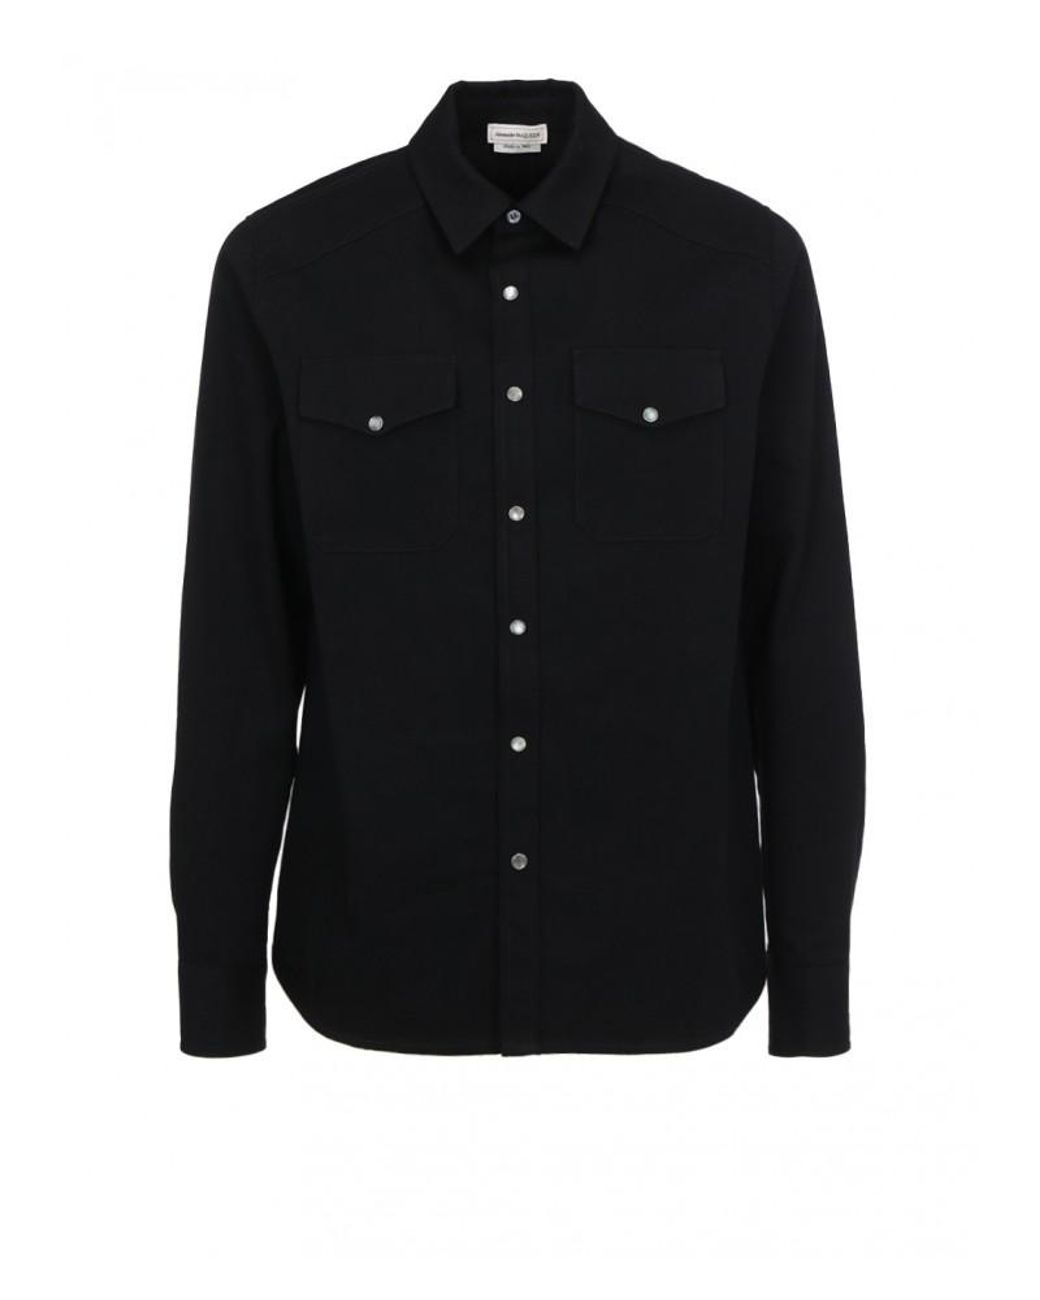 Alexander McQueen Cotton Shirt in Black for Men - Lyst